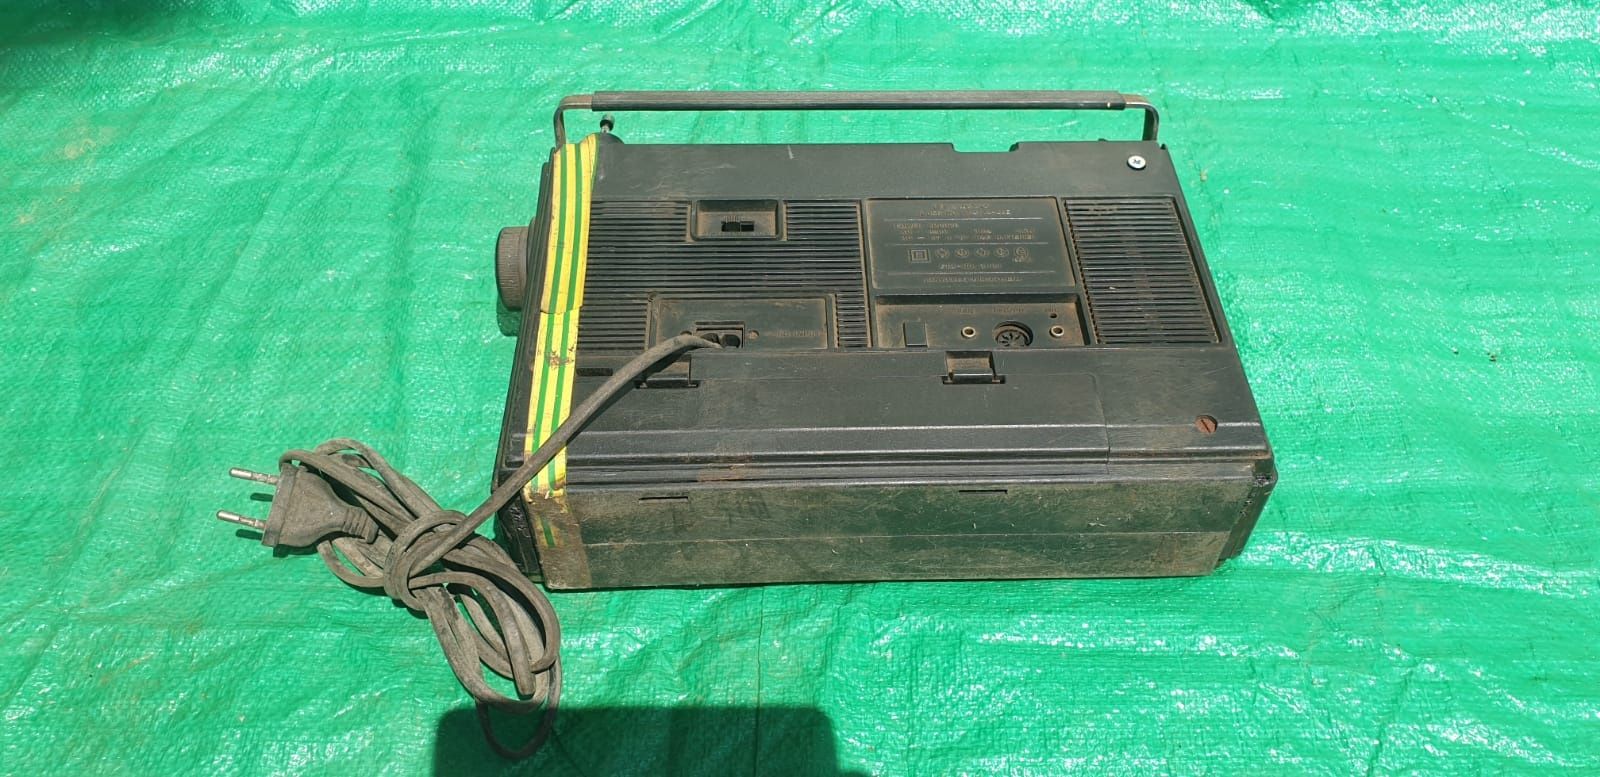 Radiocasetofon Sanyo vechi  AM ,FM 2Band M2402-LE an 1978

Sanyo Elect